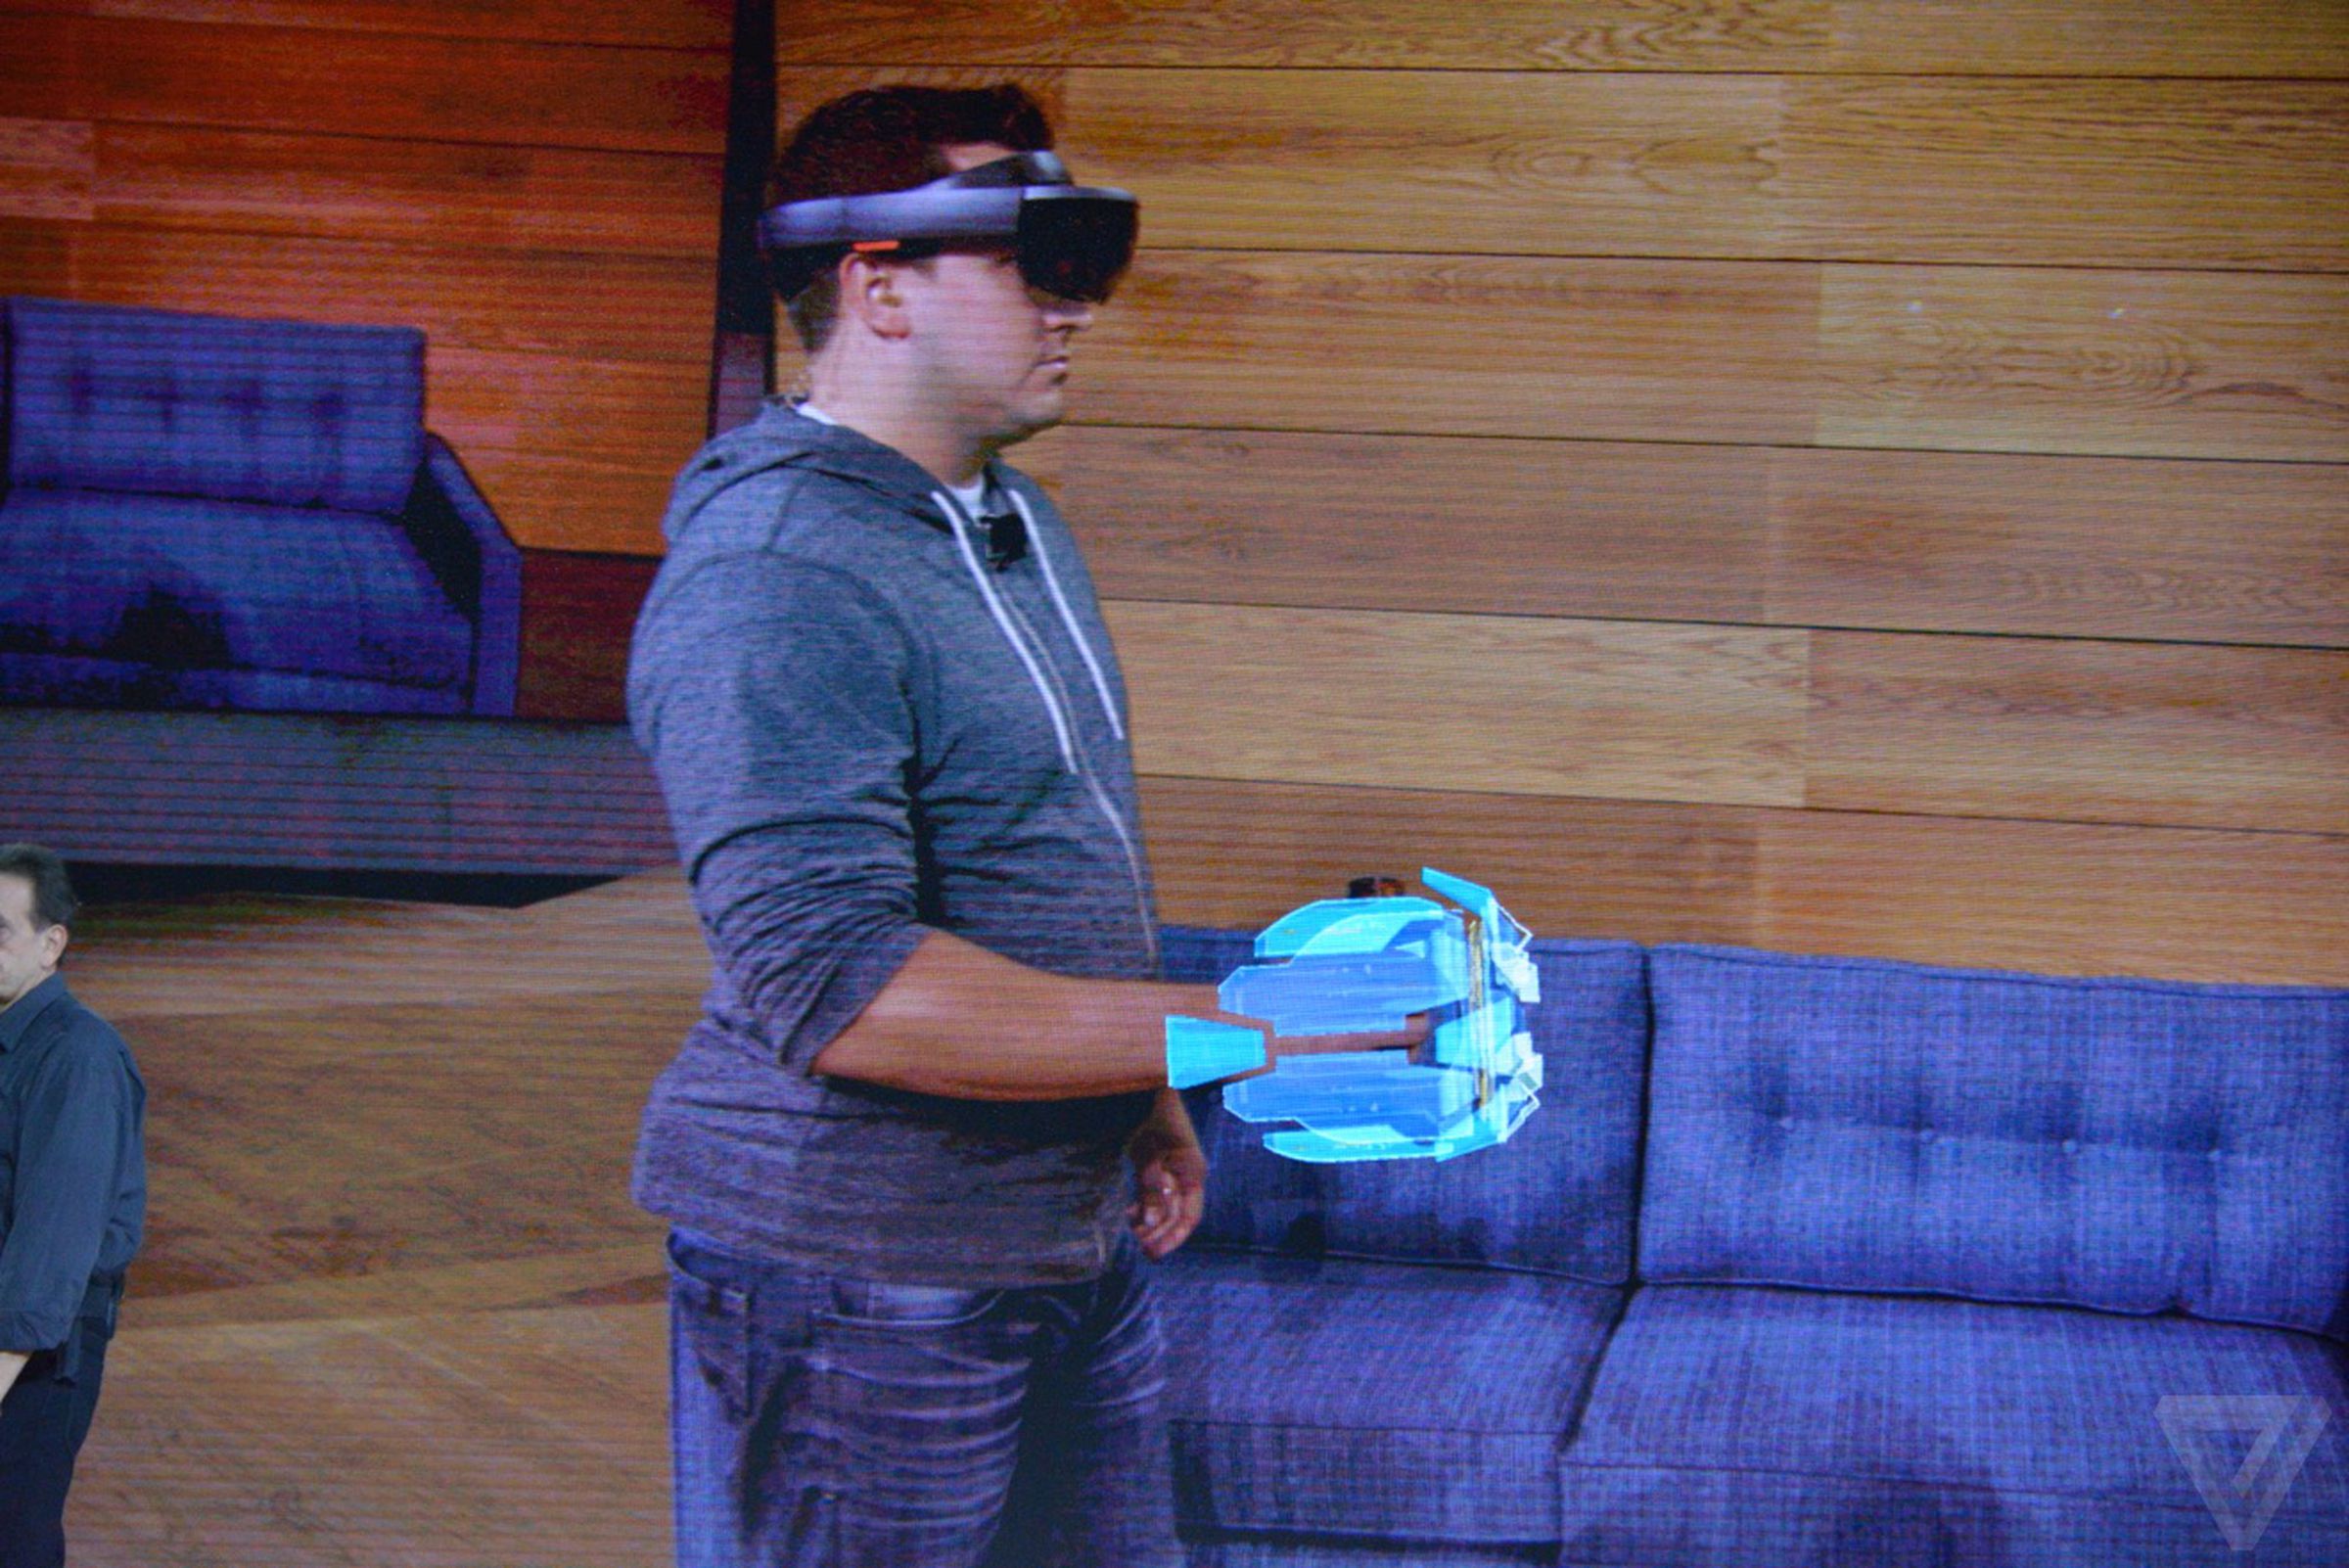 Microsoft HoloLens Project XRay demo